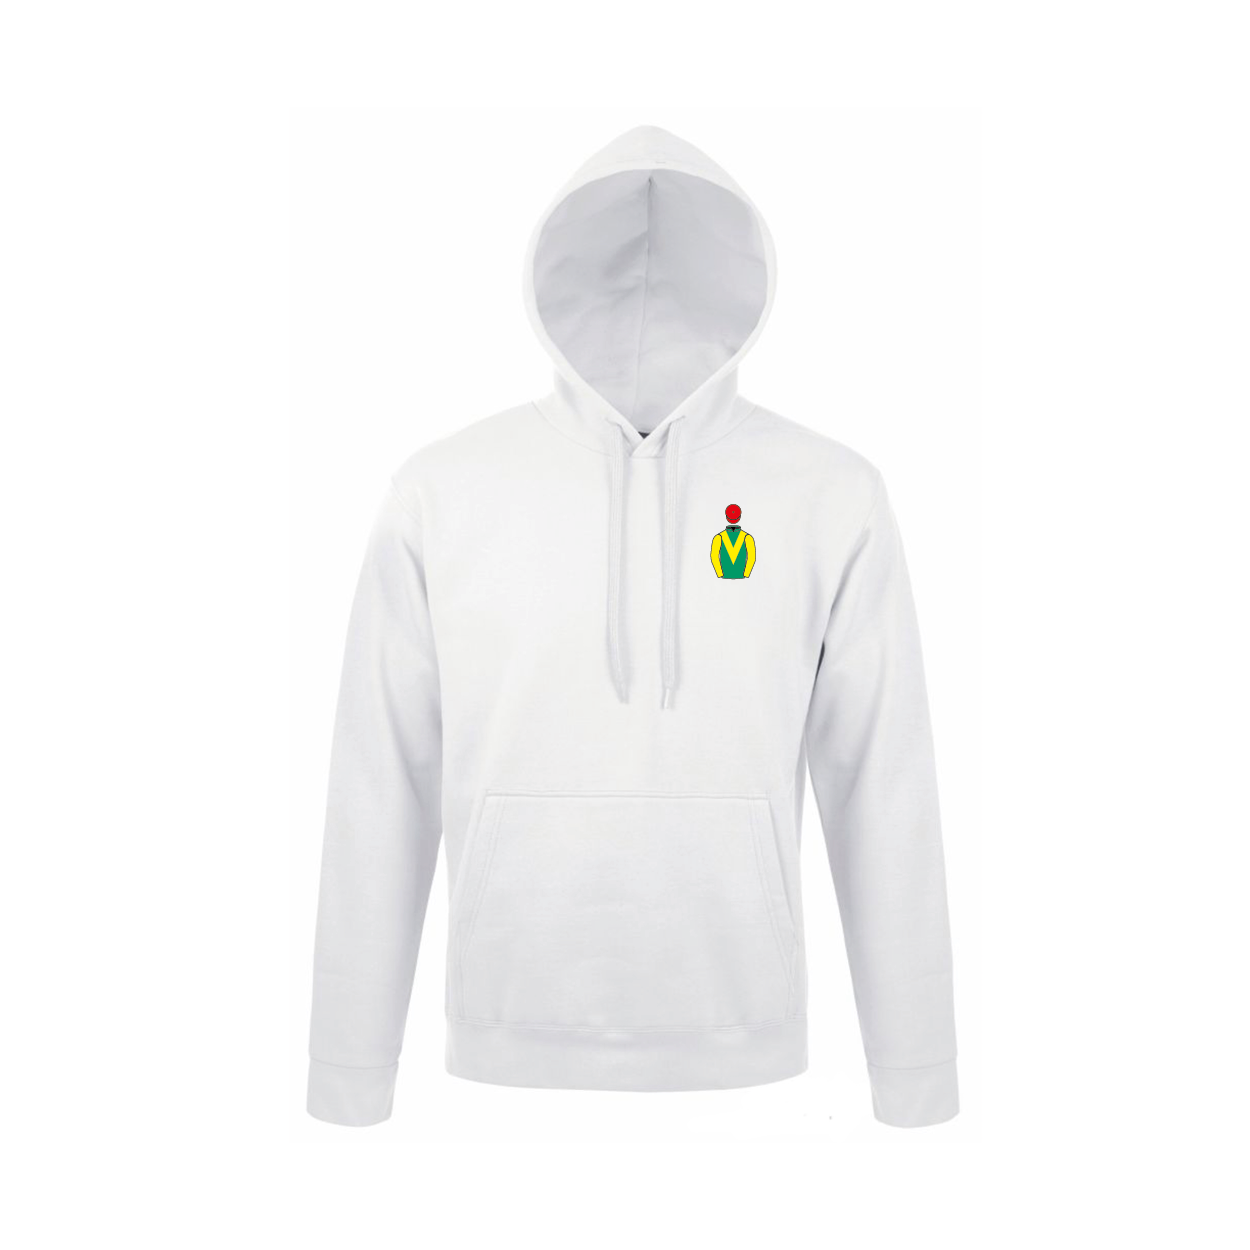 Unisex Alan Potts Embroidered Hooded Sweatshirt - Clothing - Hacked Up